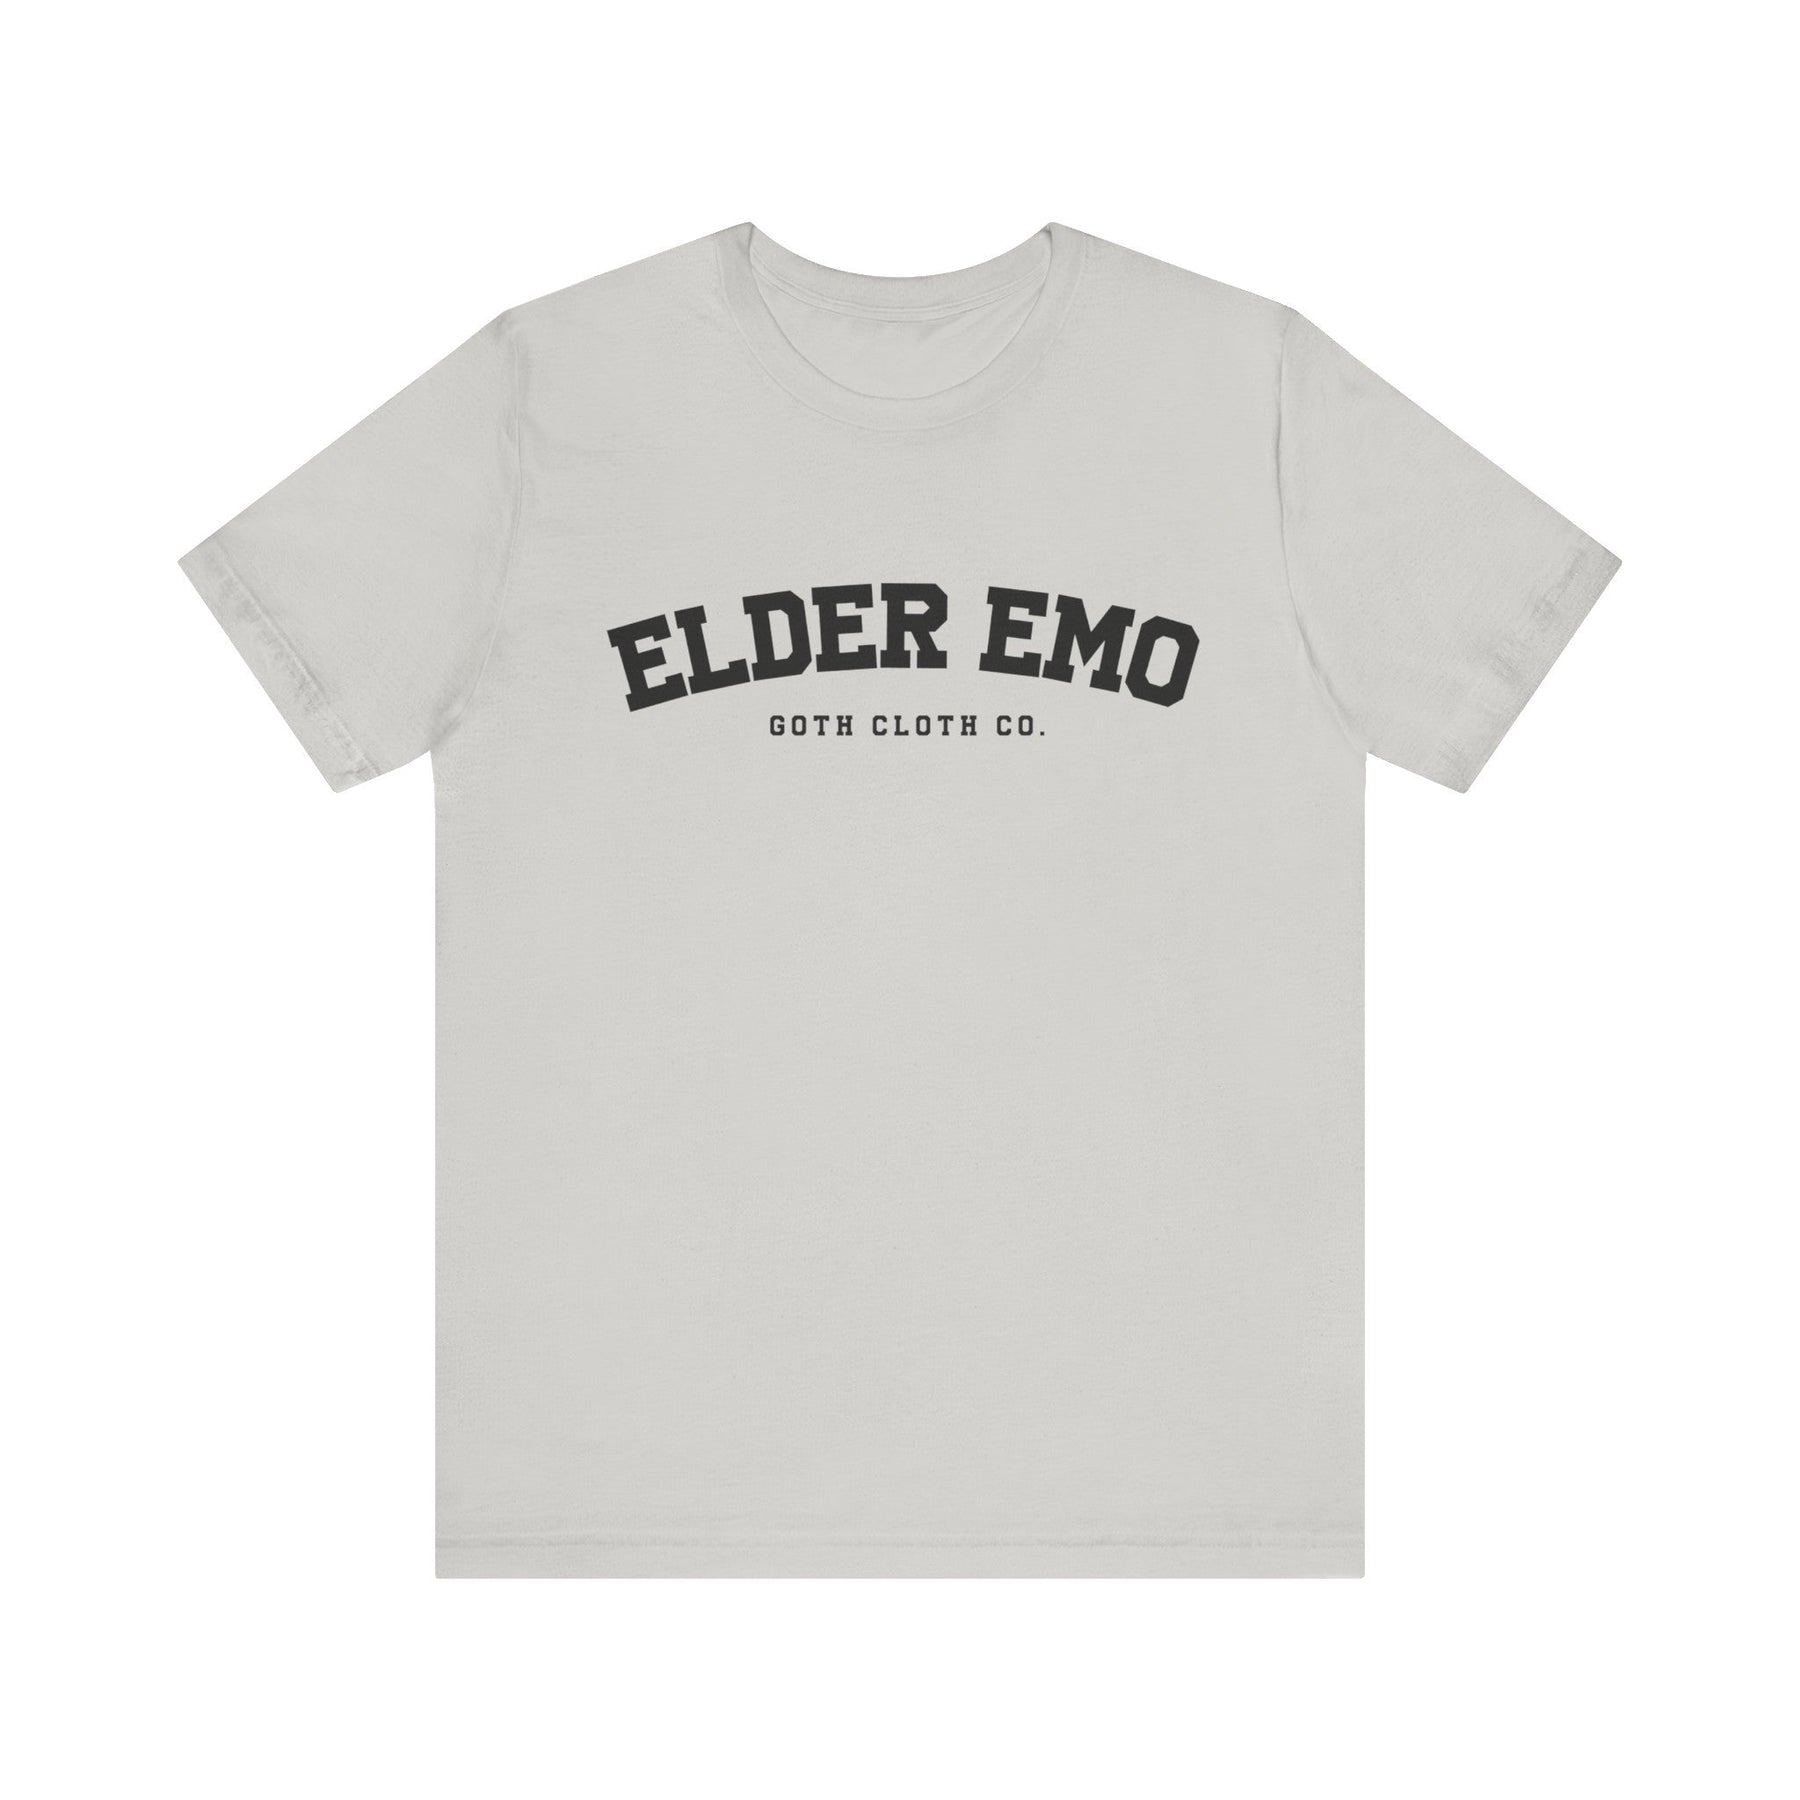 Elder Emo Short Sleeve Tee - Goth Cloth Co.T - Shirt11956893888534243347